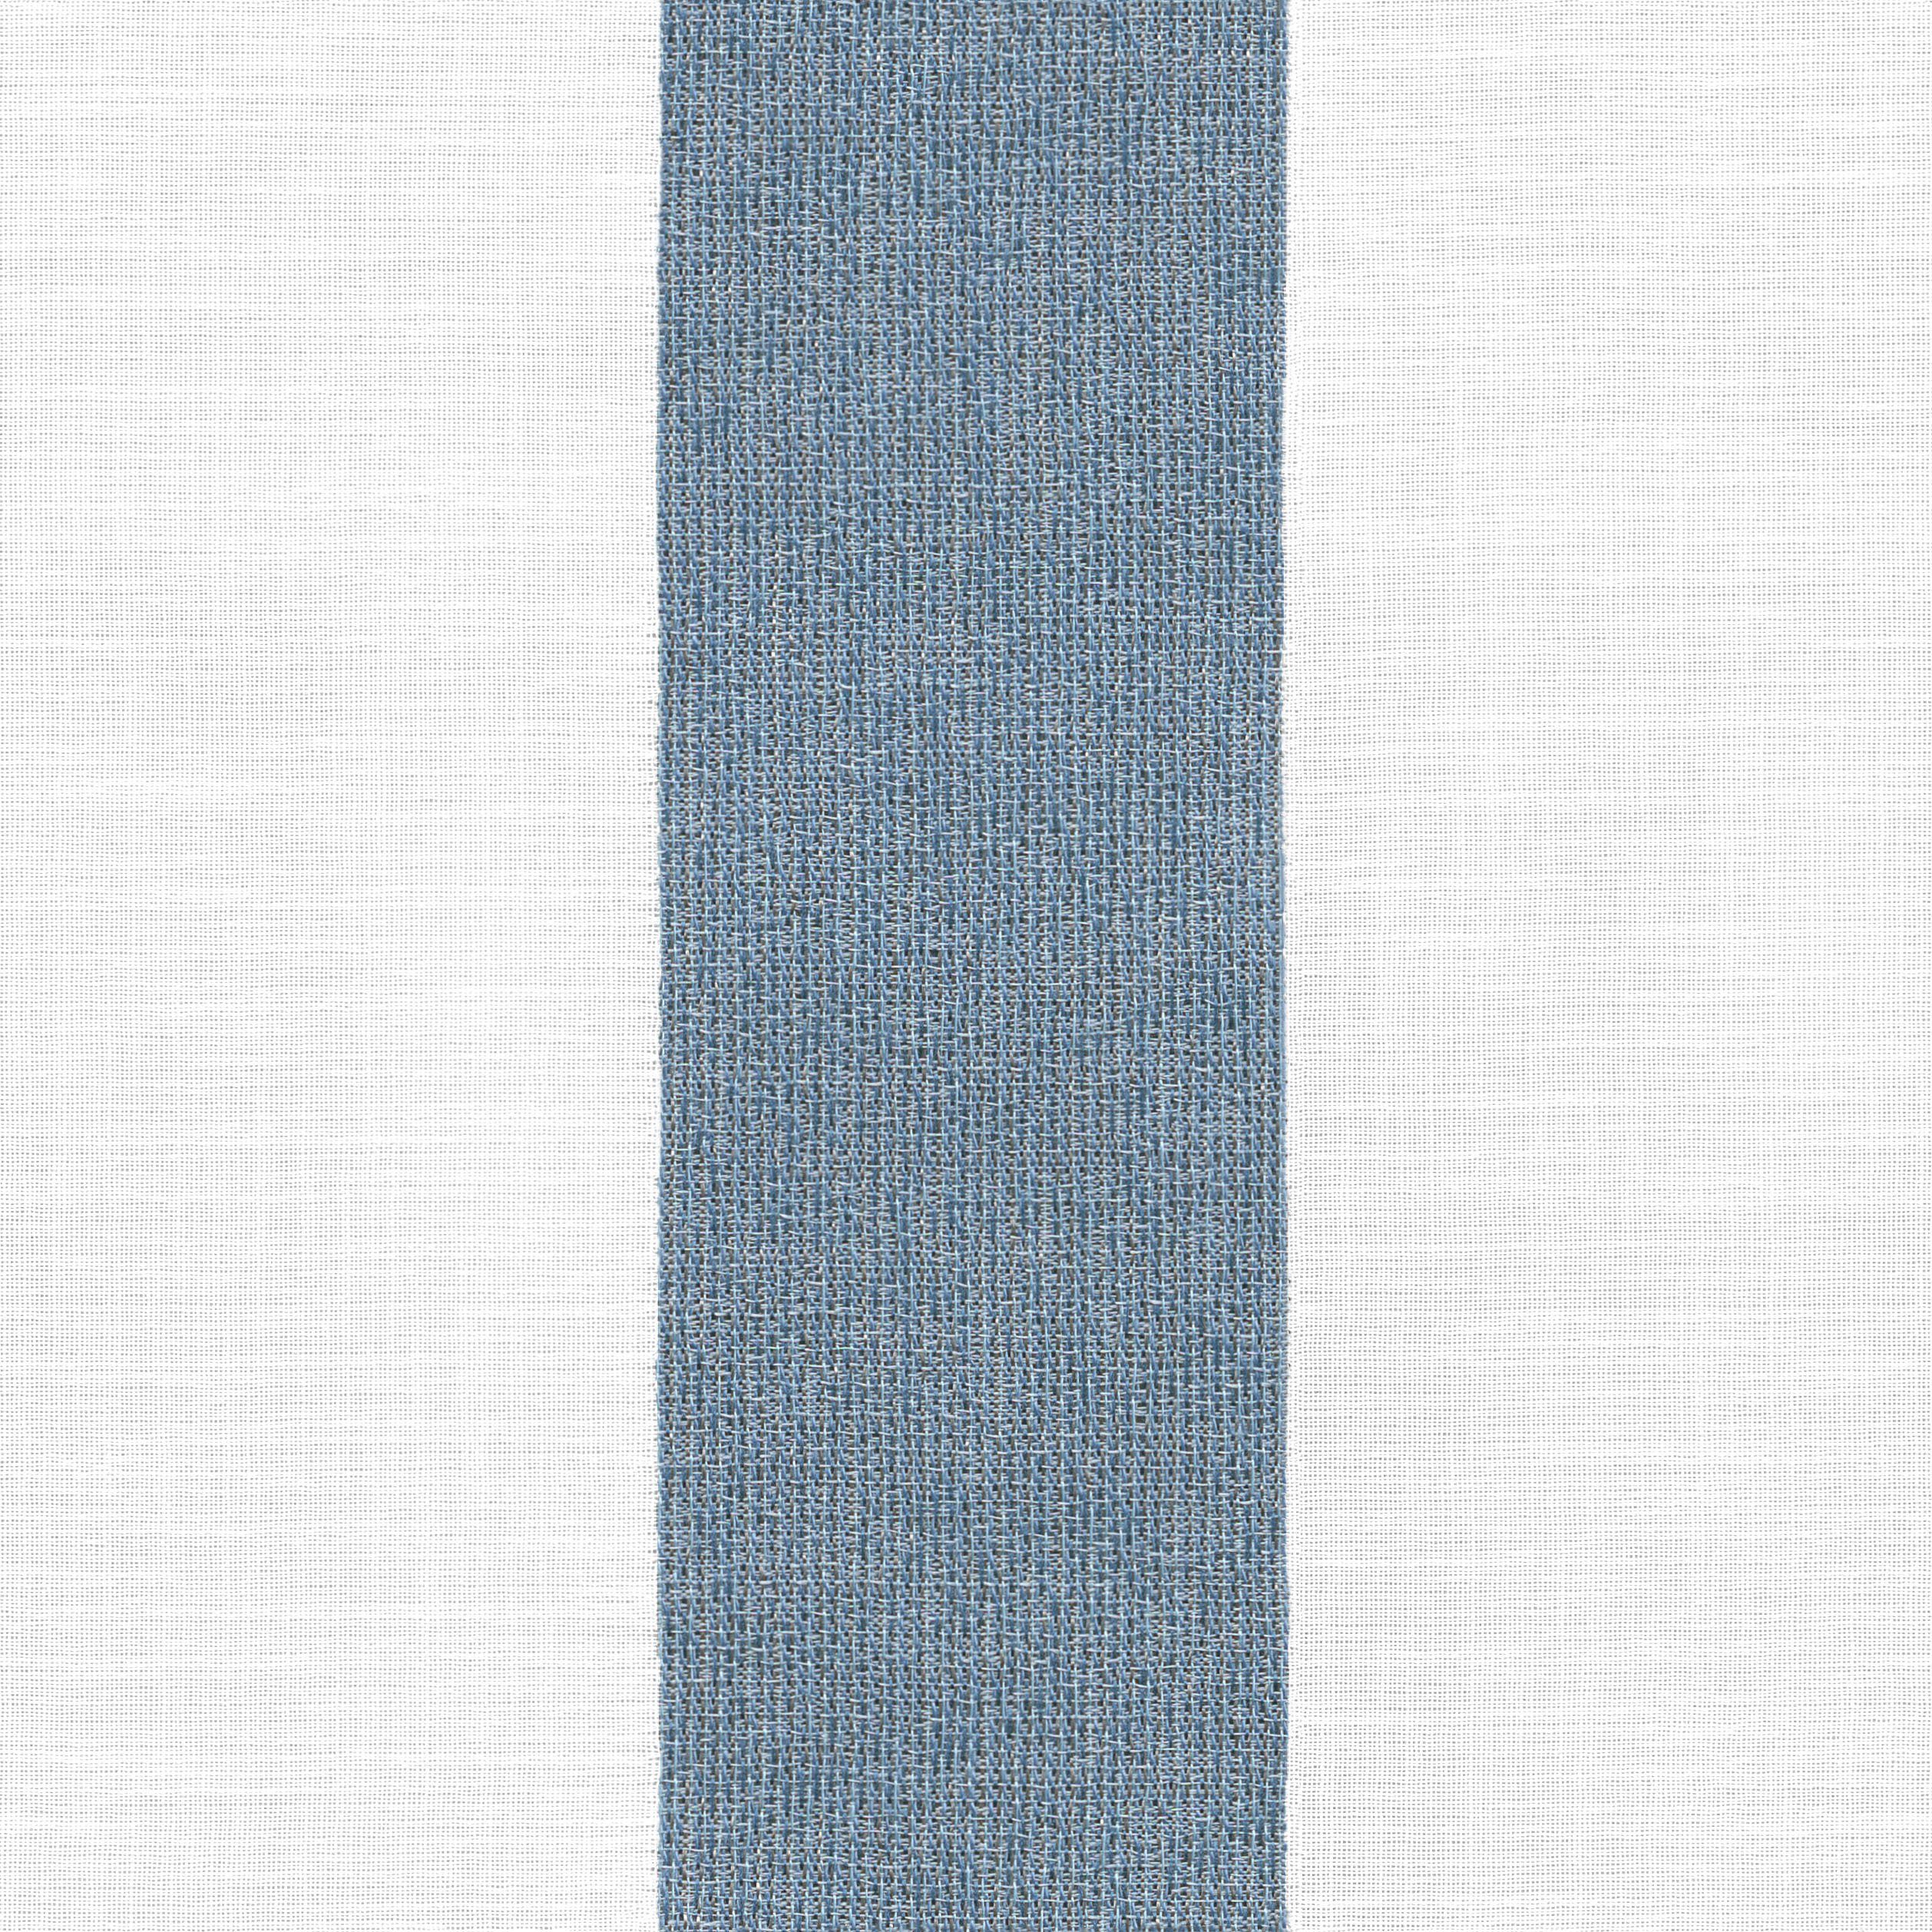 Neutex Längssteifen Vorhang (1 for Glanzeffekt mit St), Jacquard, bleu/weiß you!, transparent, Ösen ALASSIO,